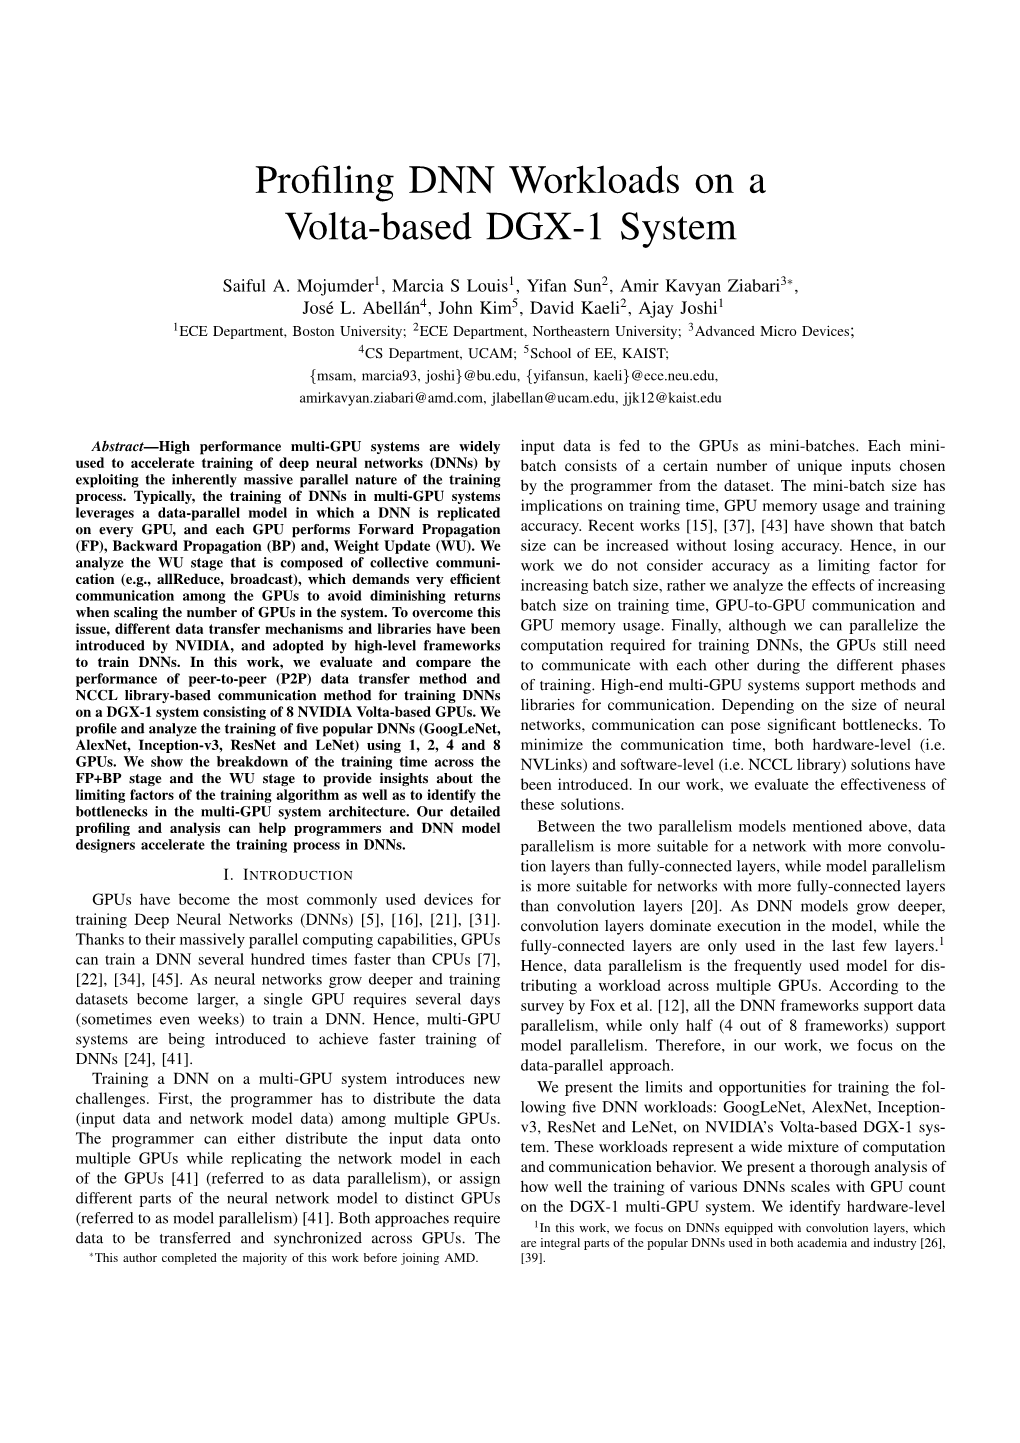 Profiling DNN Workloads on a Volta-Based DGX-1 System